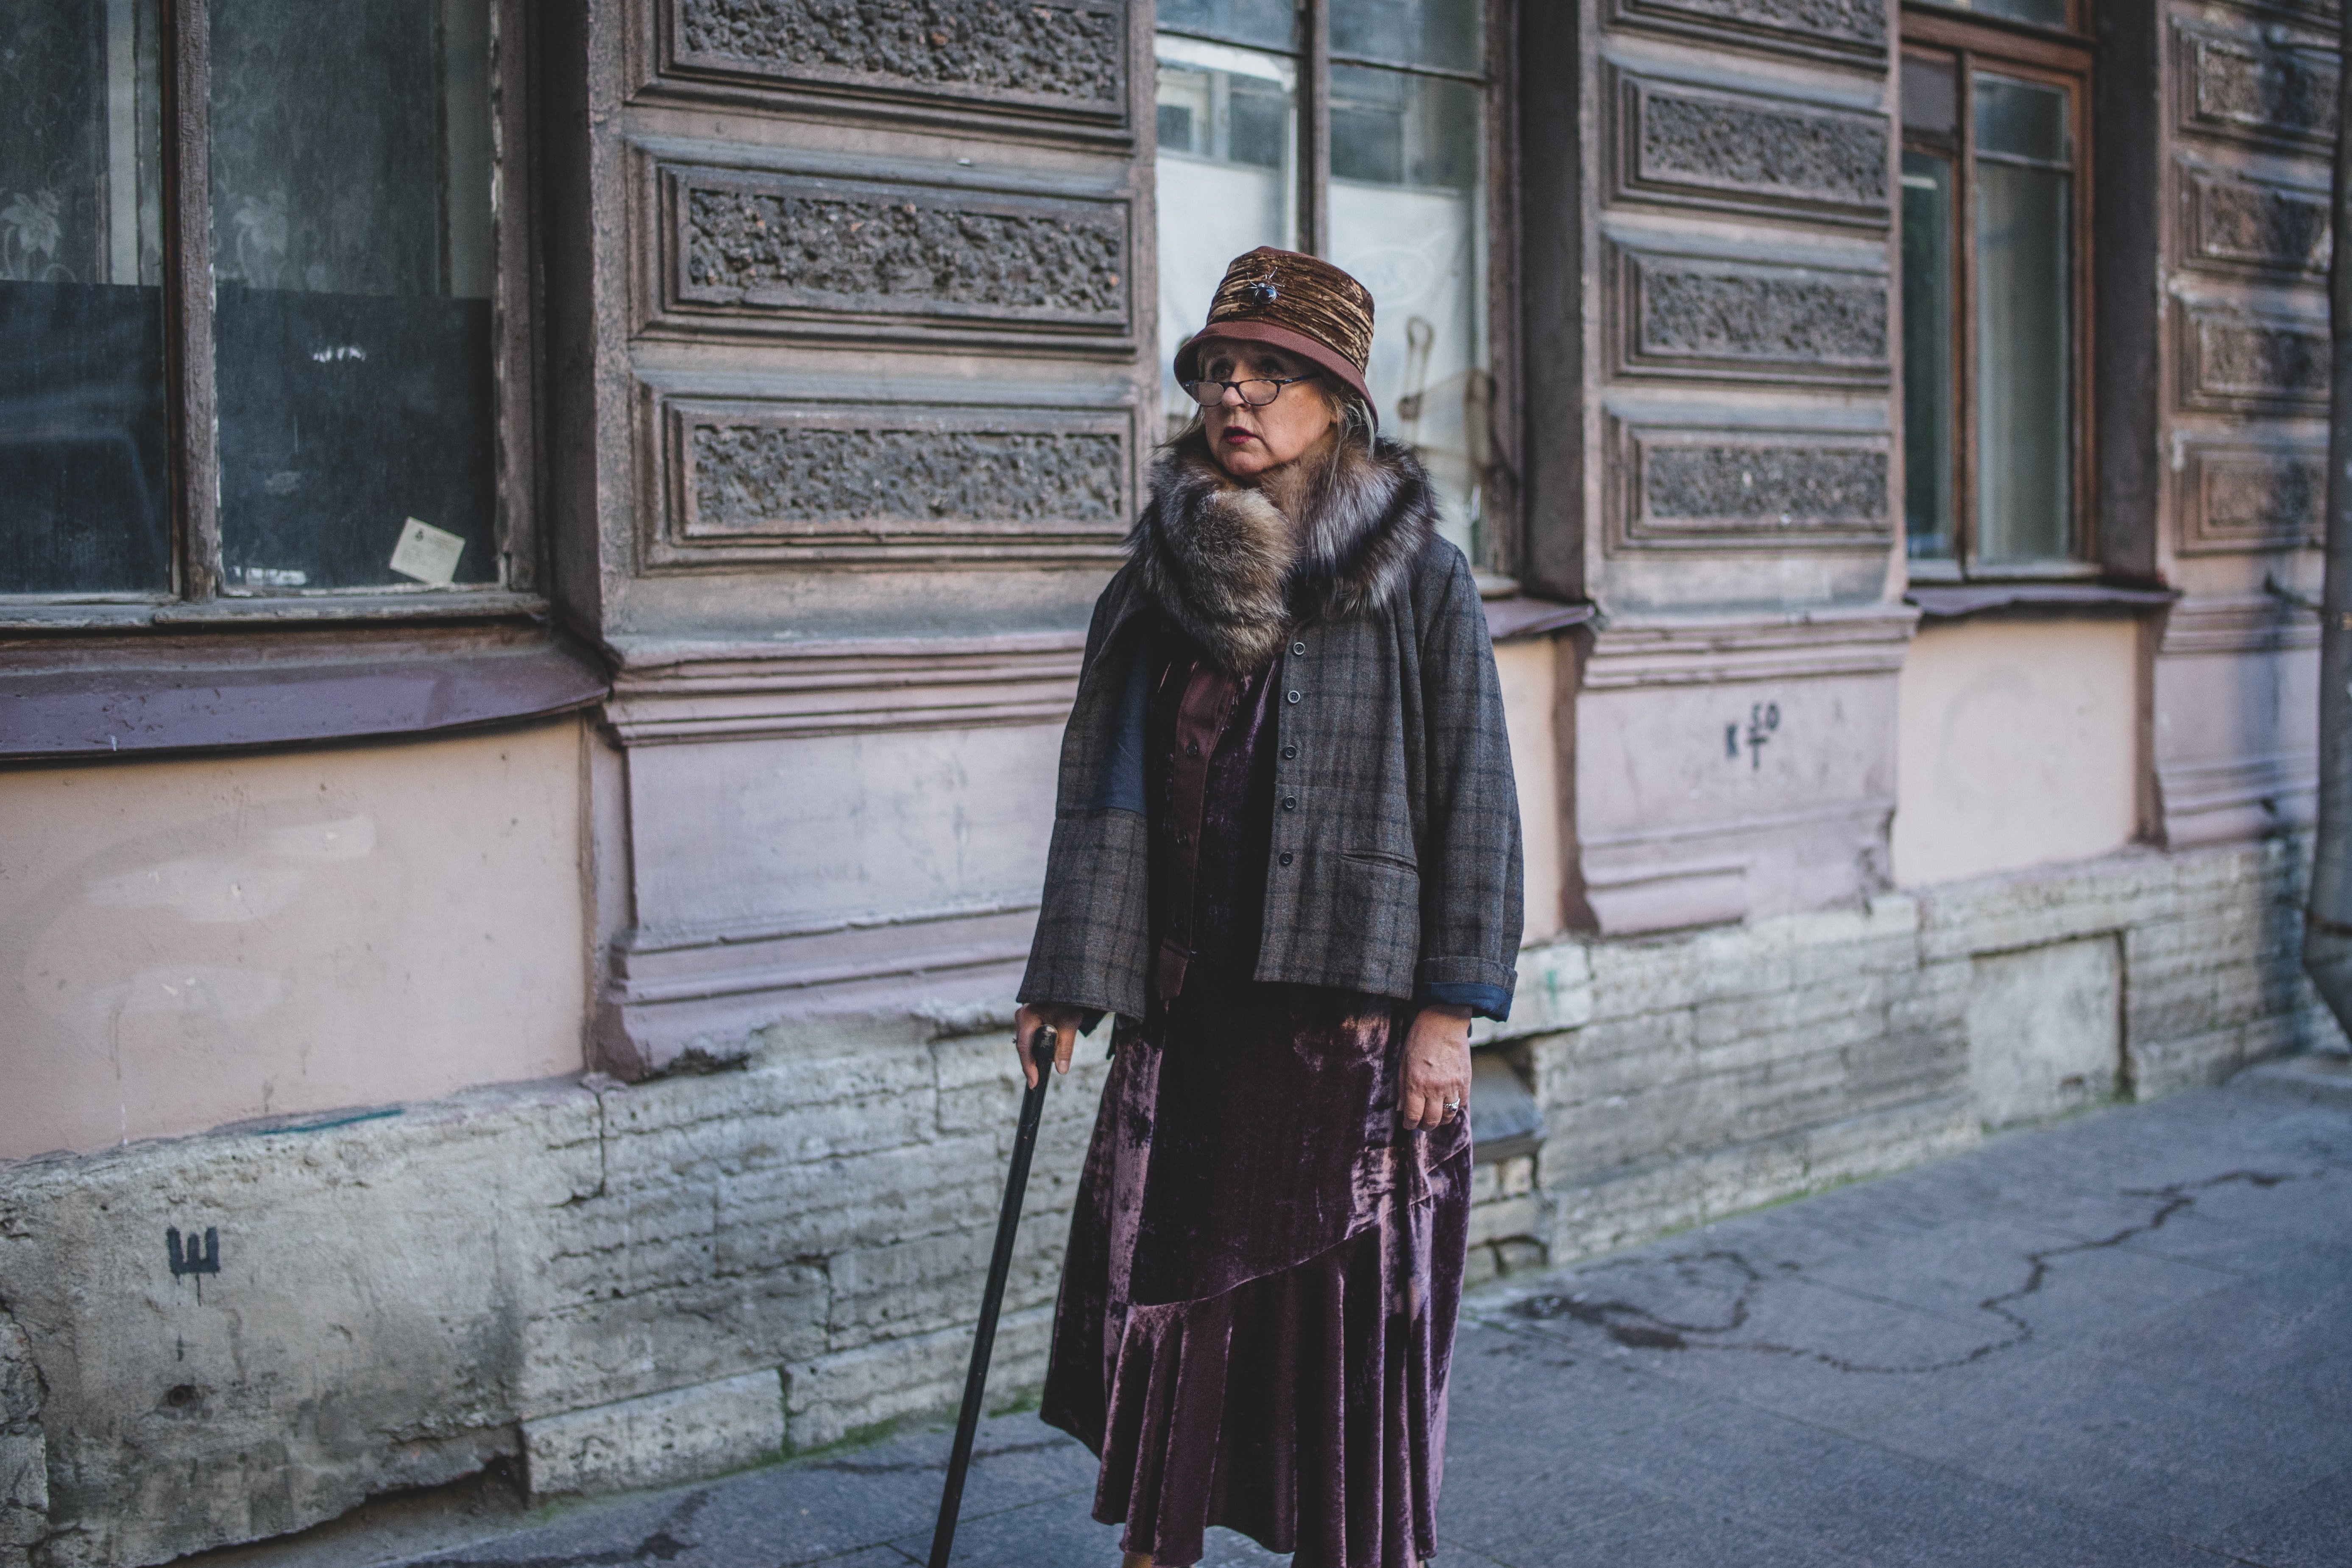 Agnes could no longer walk without her cane. | Source: Unsplash